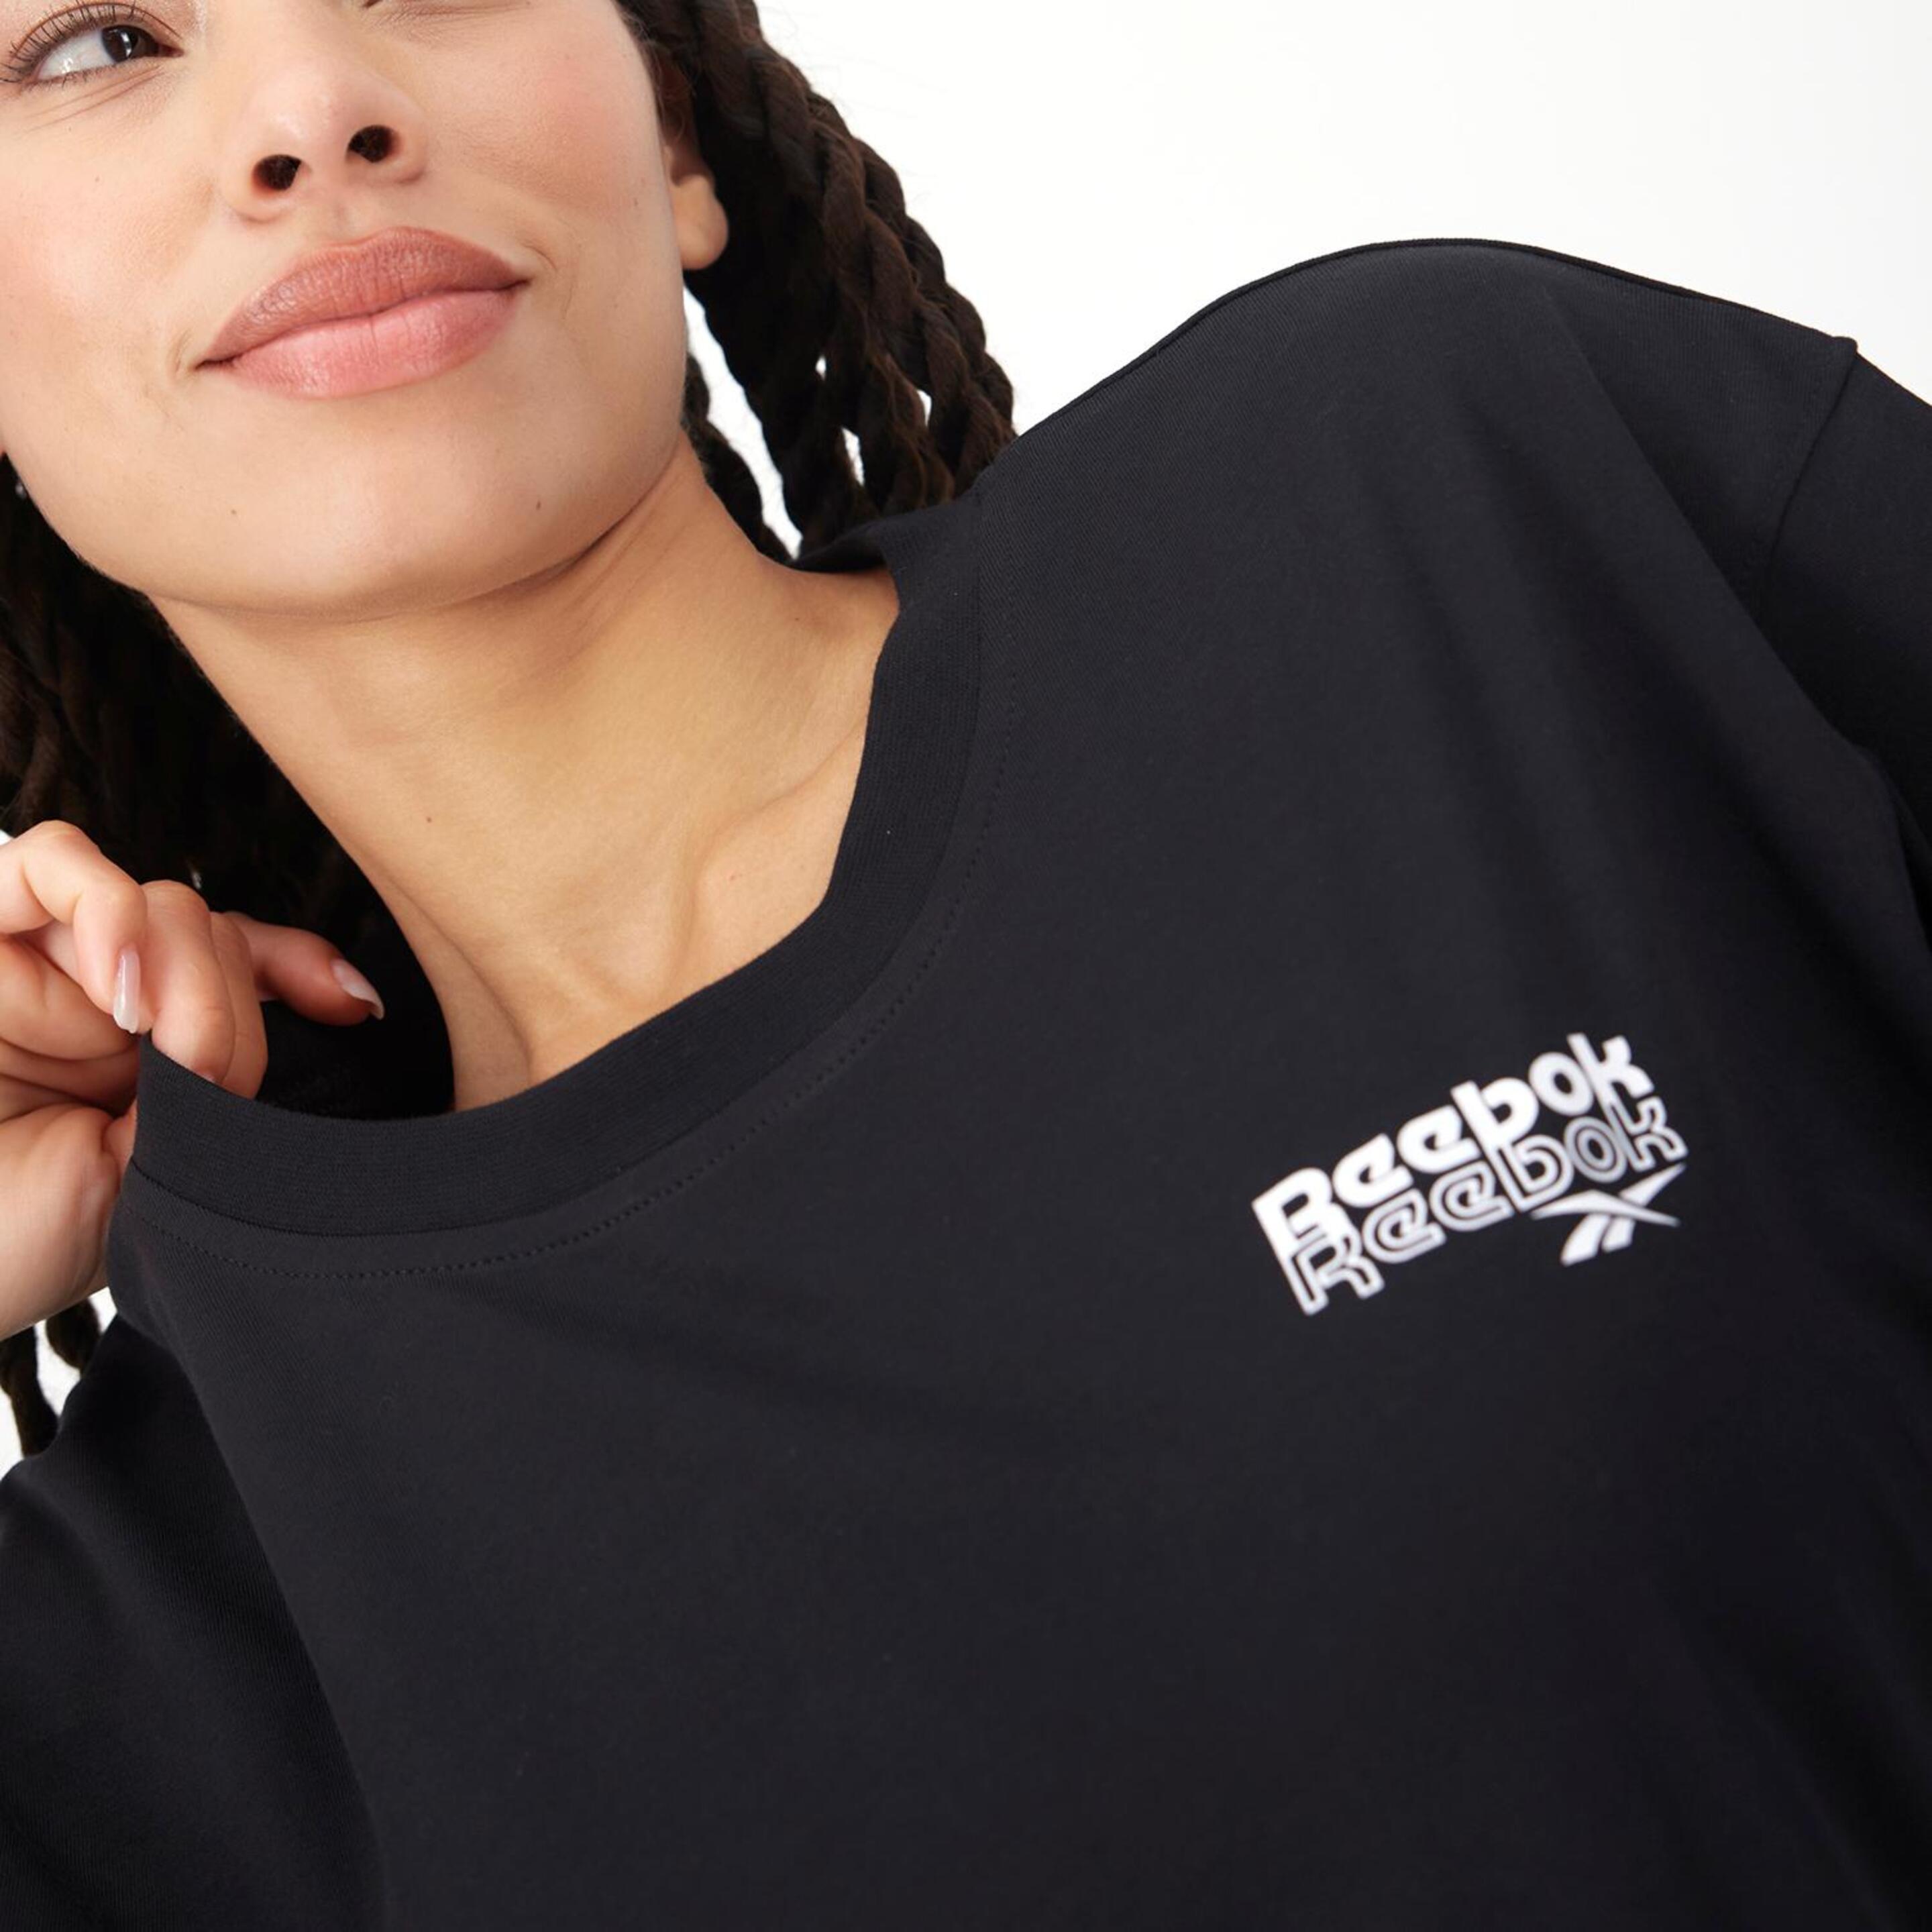 Reebok Rie - Negro - Camiseta Mujer